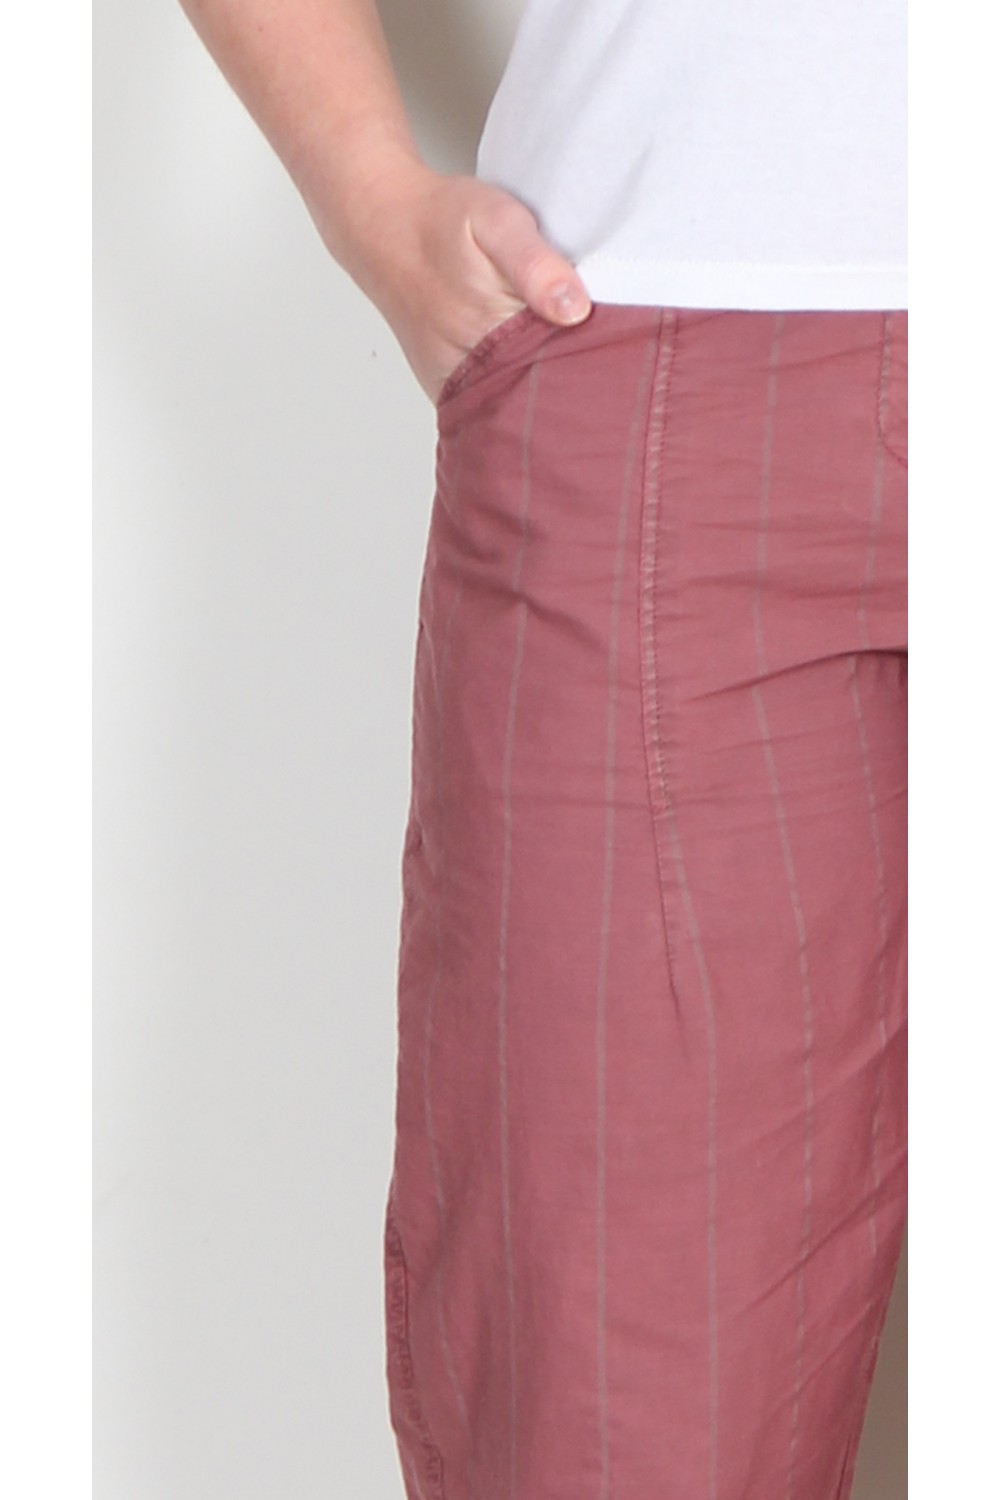 OSKA Trousers Tertia 315 Mauve / Cotton-Linen Blend